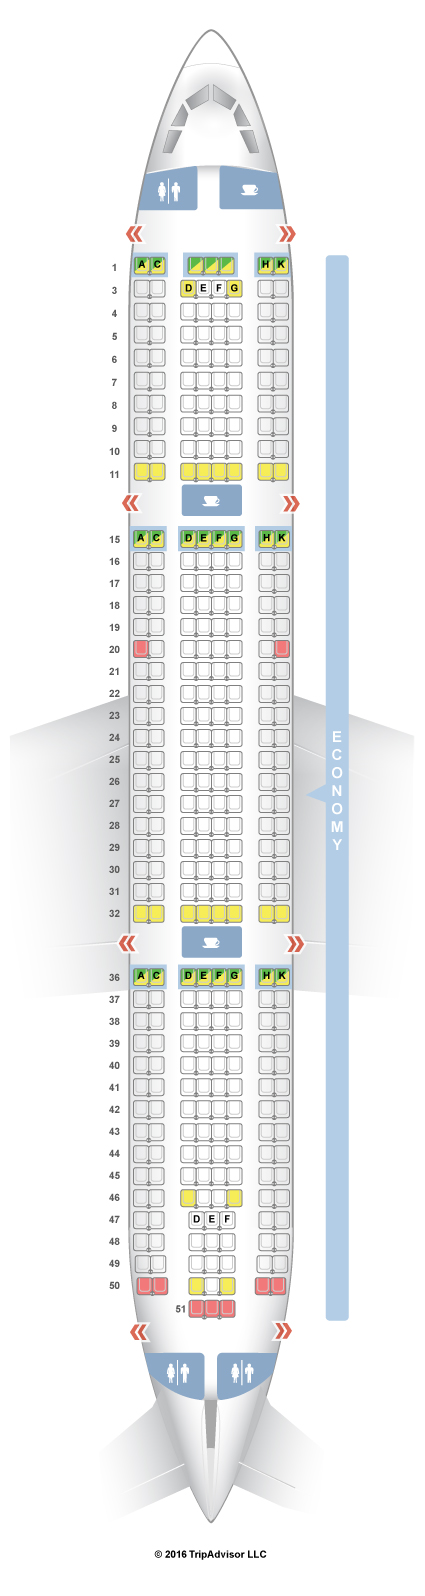 Wow Plane Seating Chart